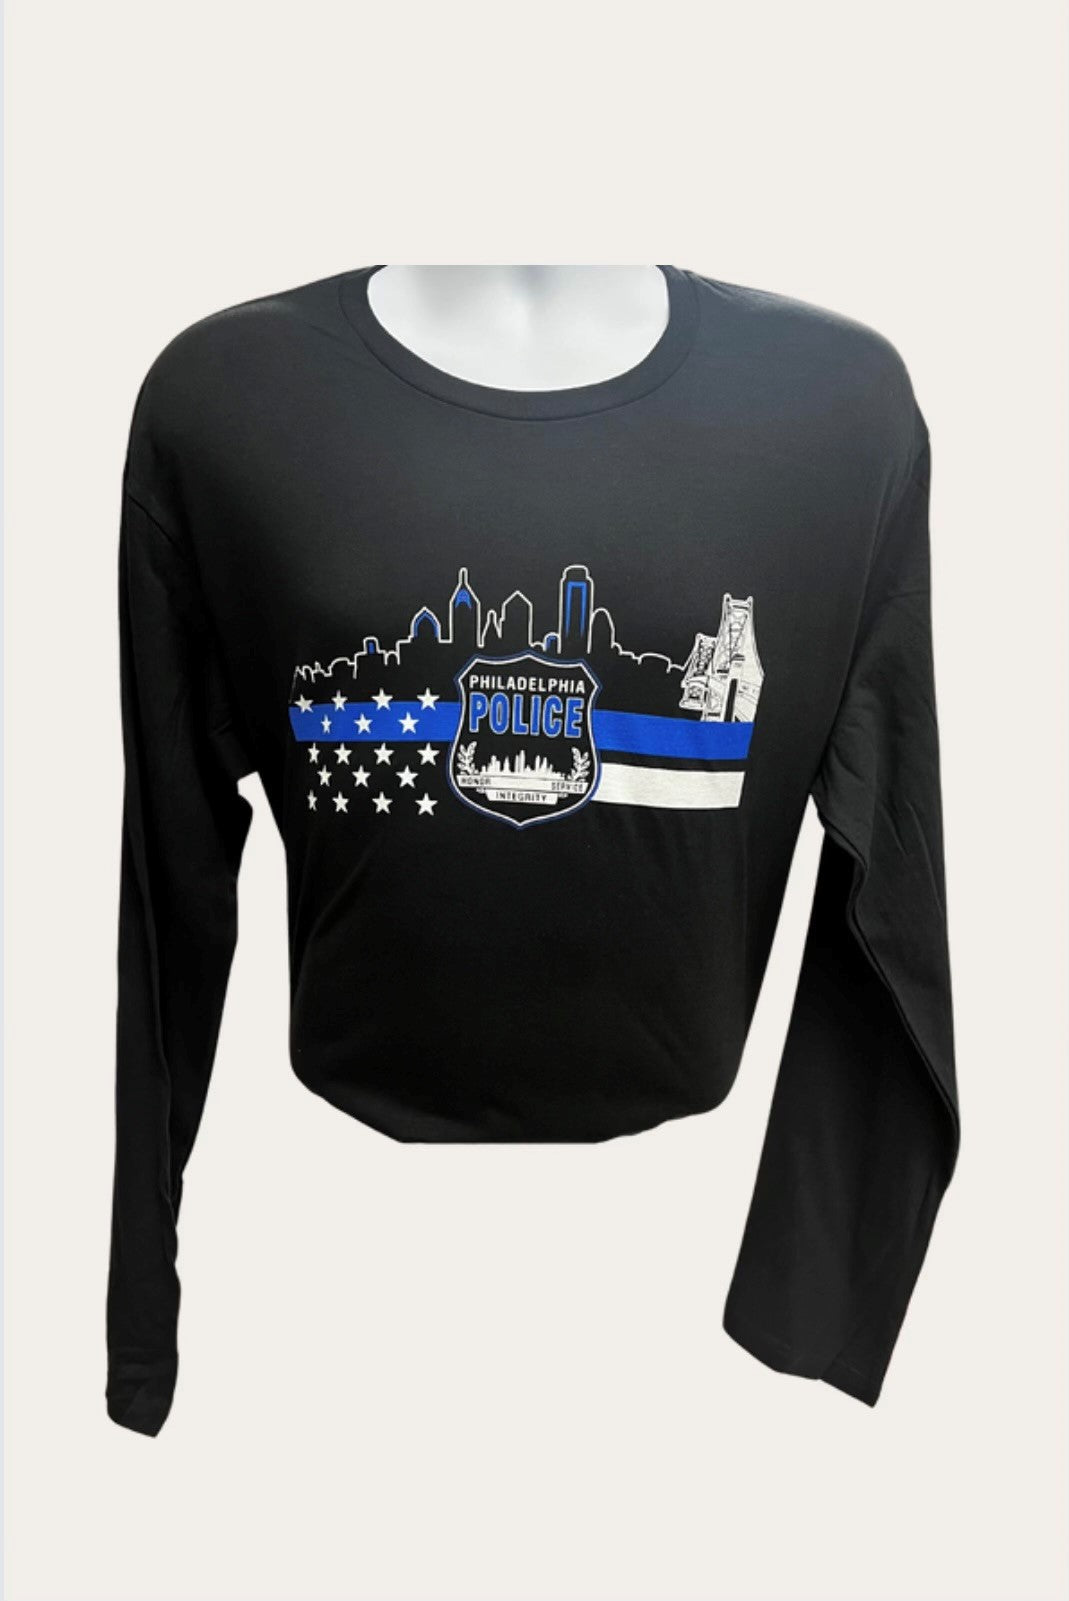 City Skyline Thin Blue Line PPD Shirt